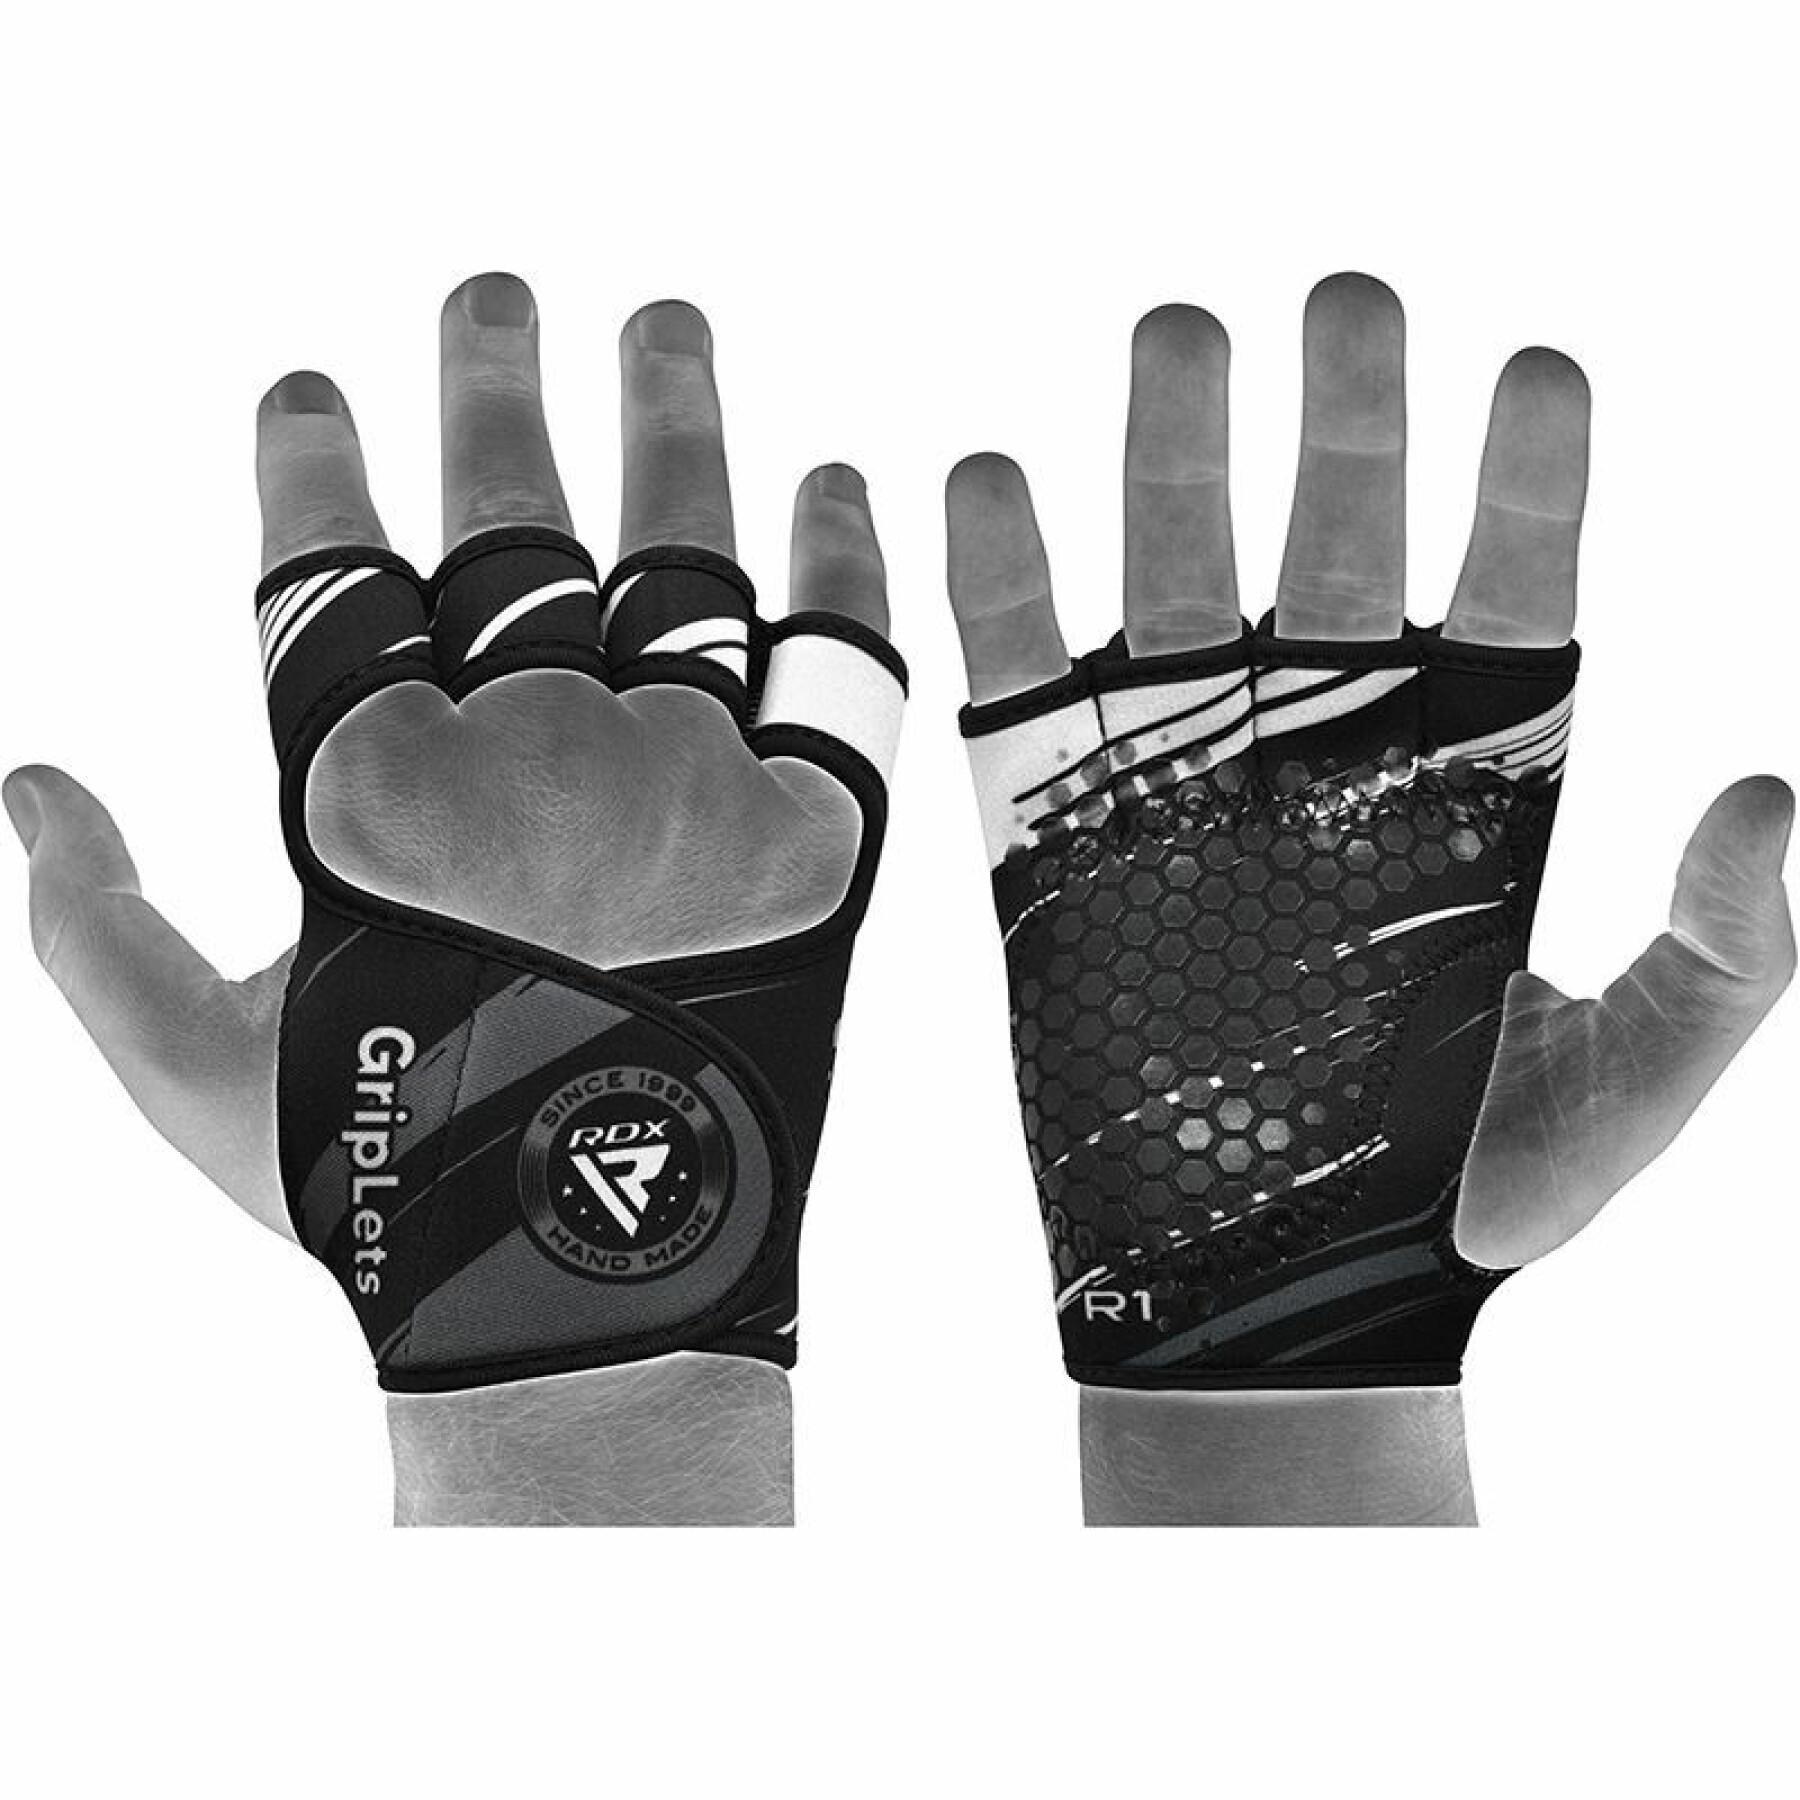 Short strap weightlifting gloves RDX R1